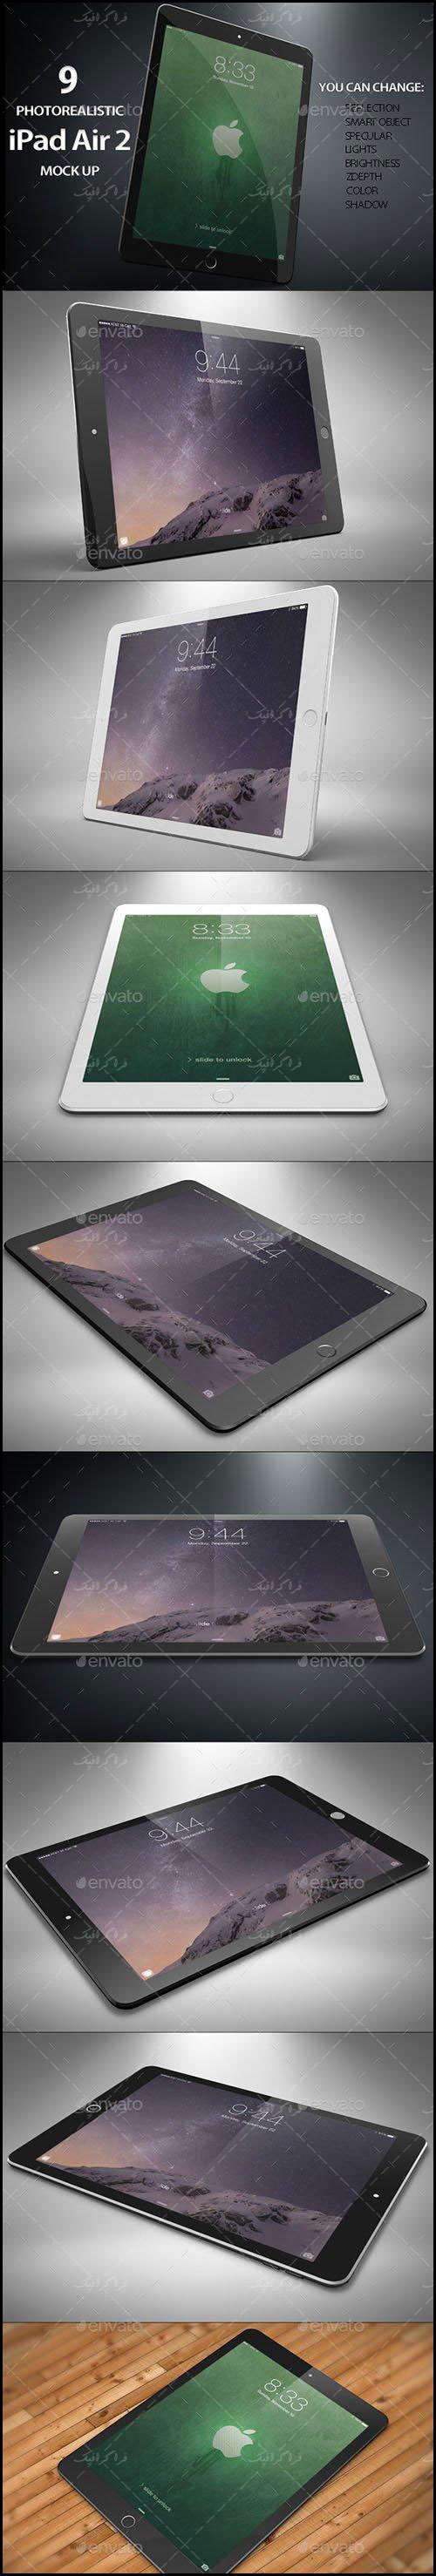 دانلود ماک آپ فتوشاپ تبلت iPad Air 2 - شماره 2